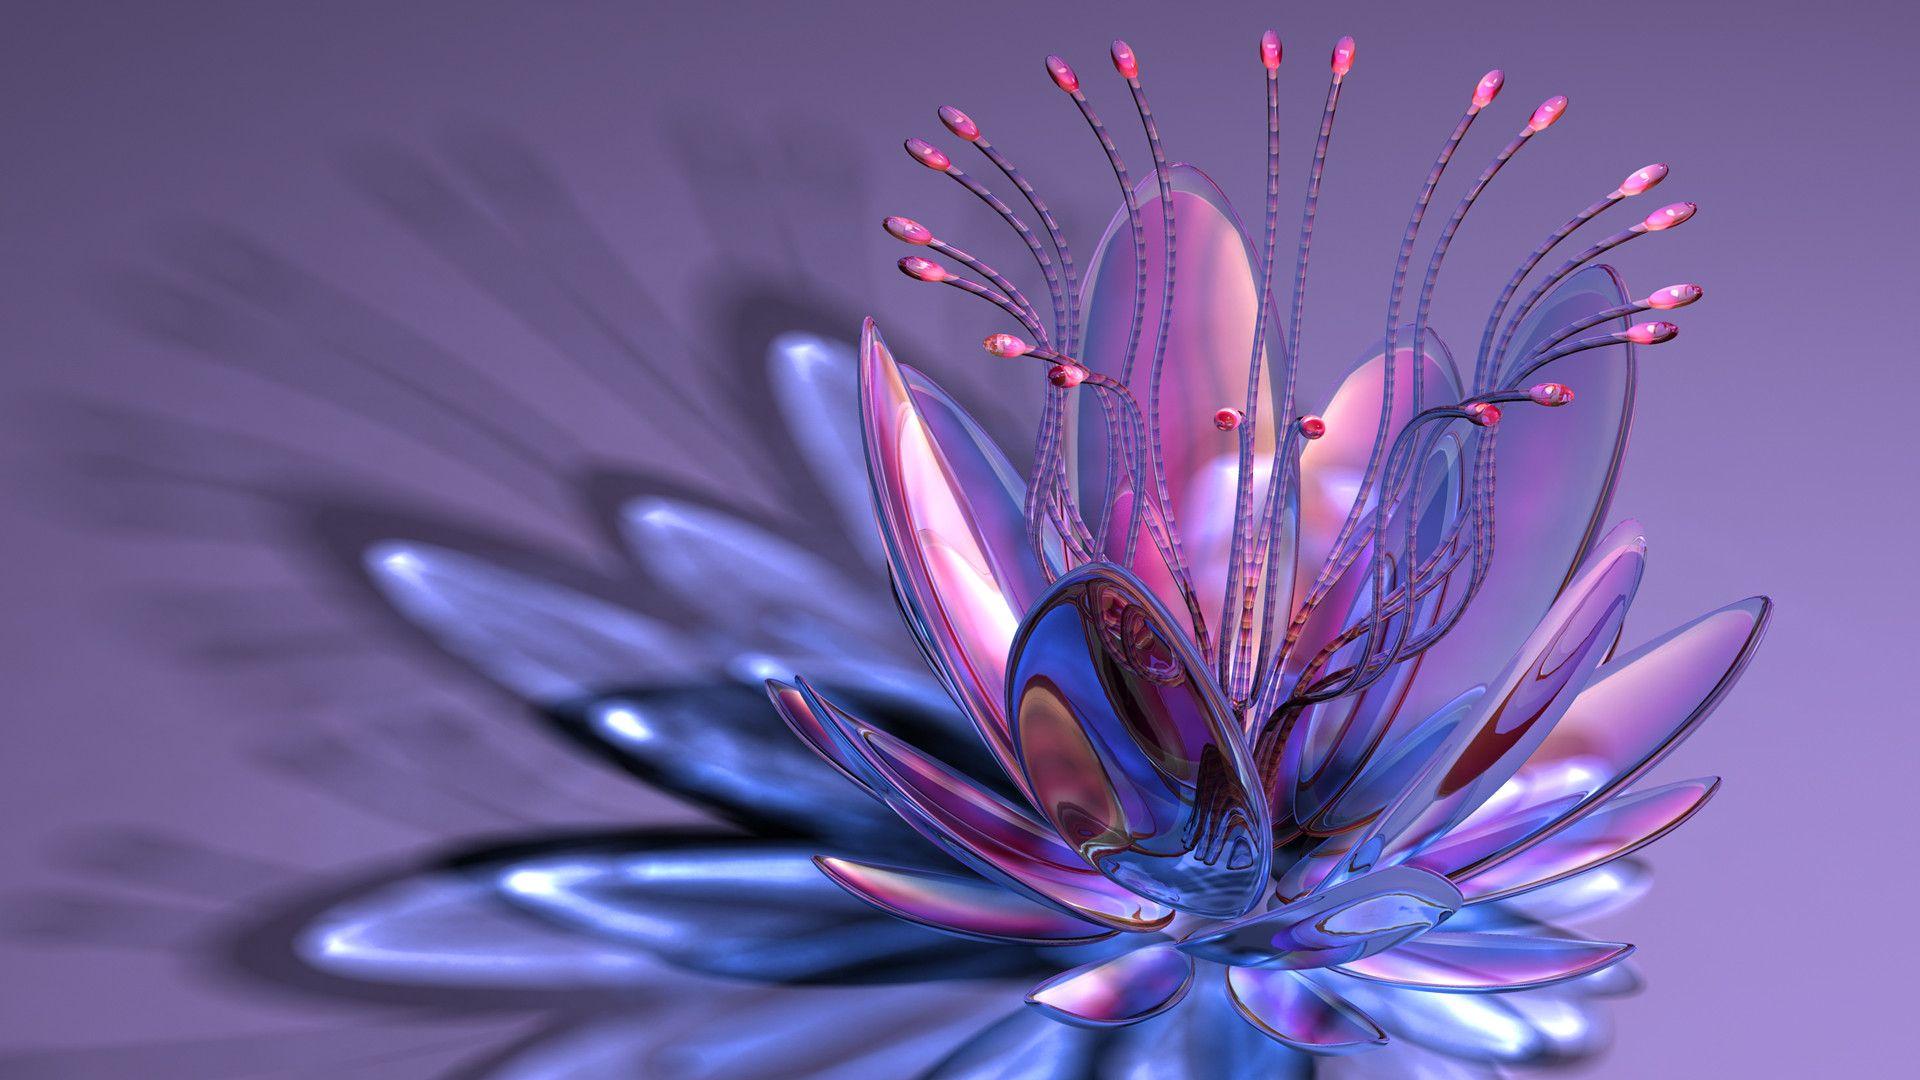 Aquarius Glass Flower HD Wallpaper 3D For Desktop Mobile Phones And Lapx1080, Wallpaper13.com